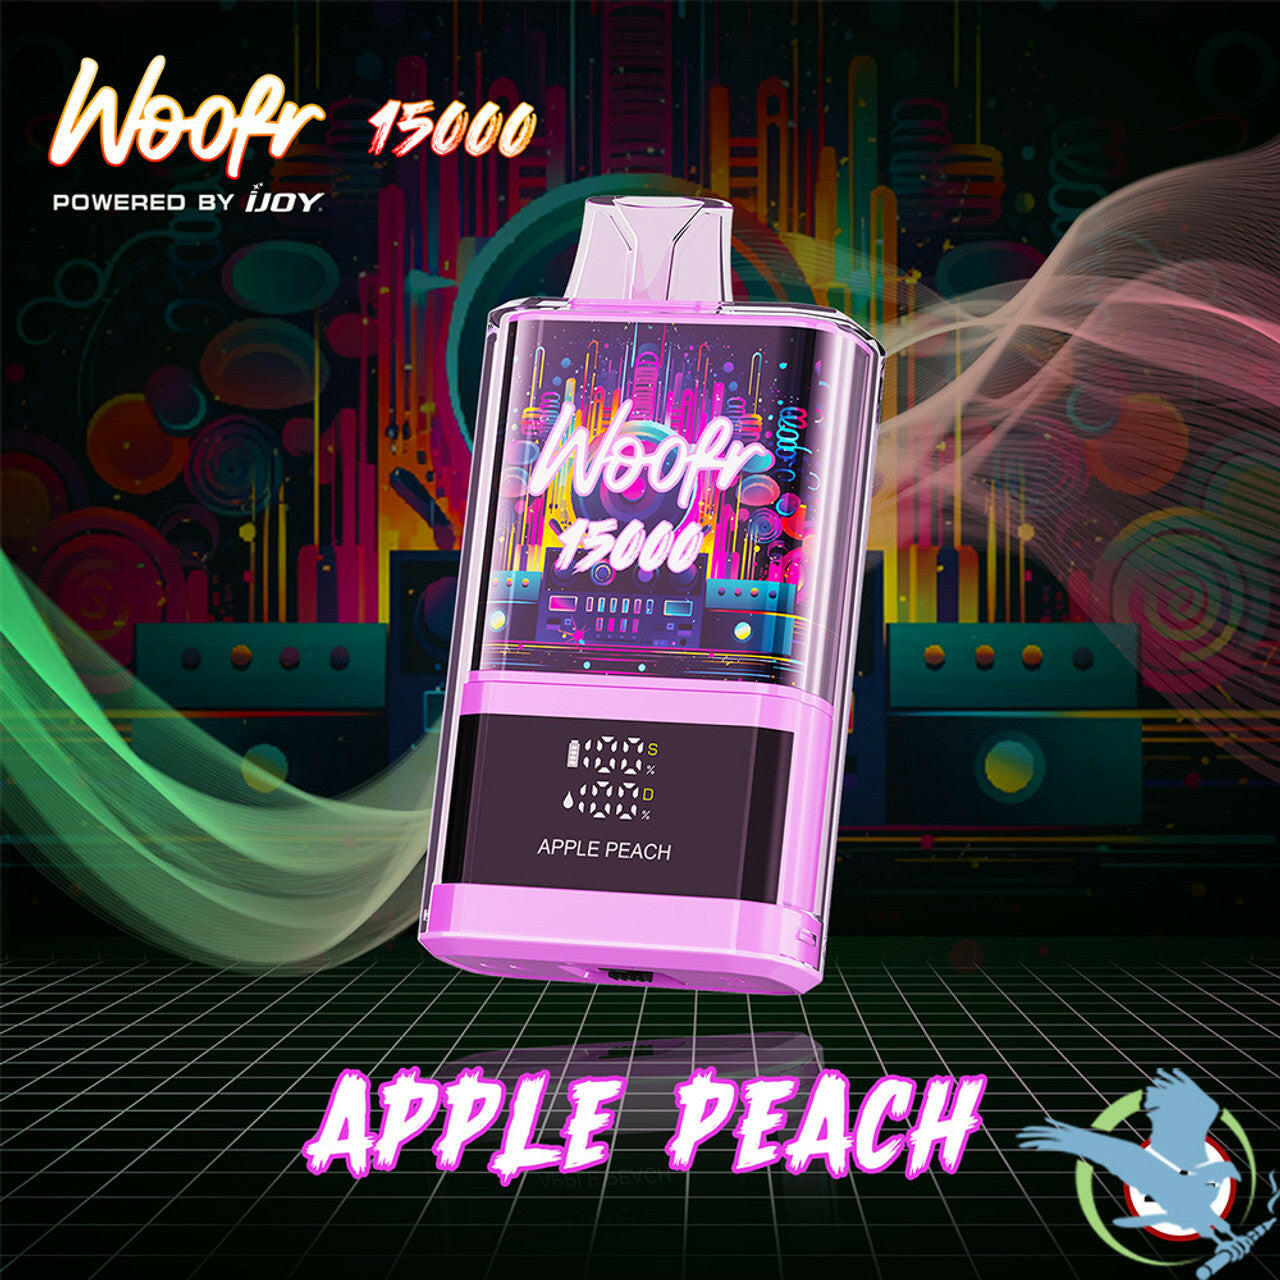 Woofr 15000 Disposable - Apple Peach